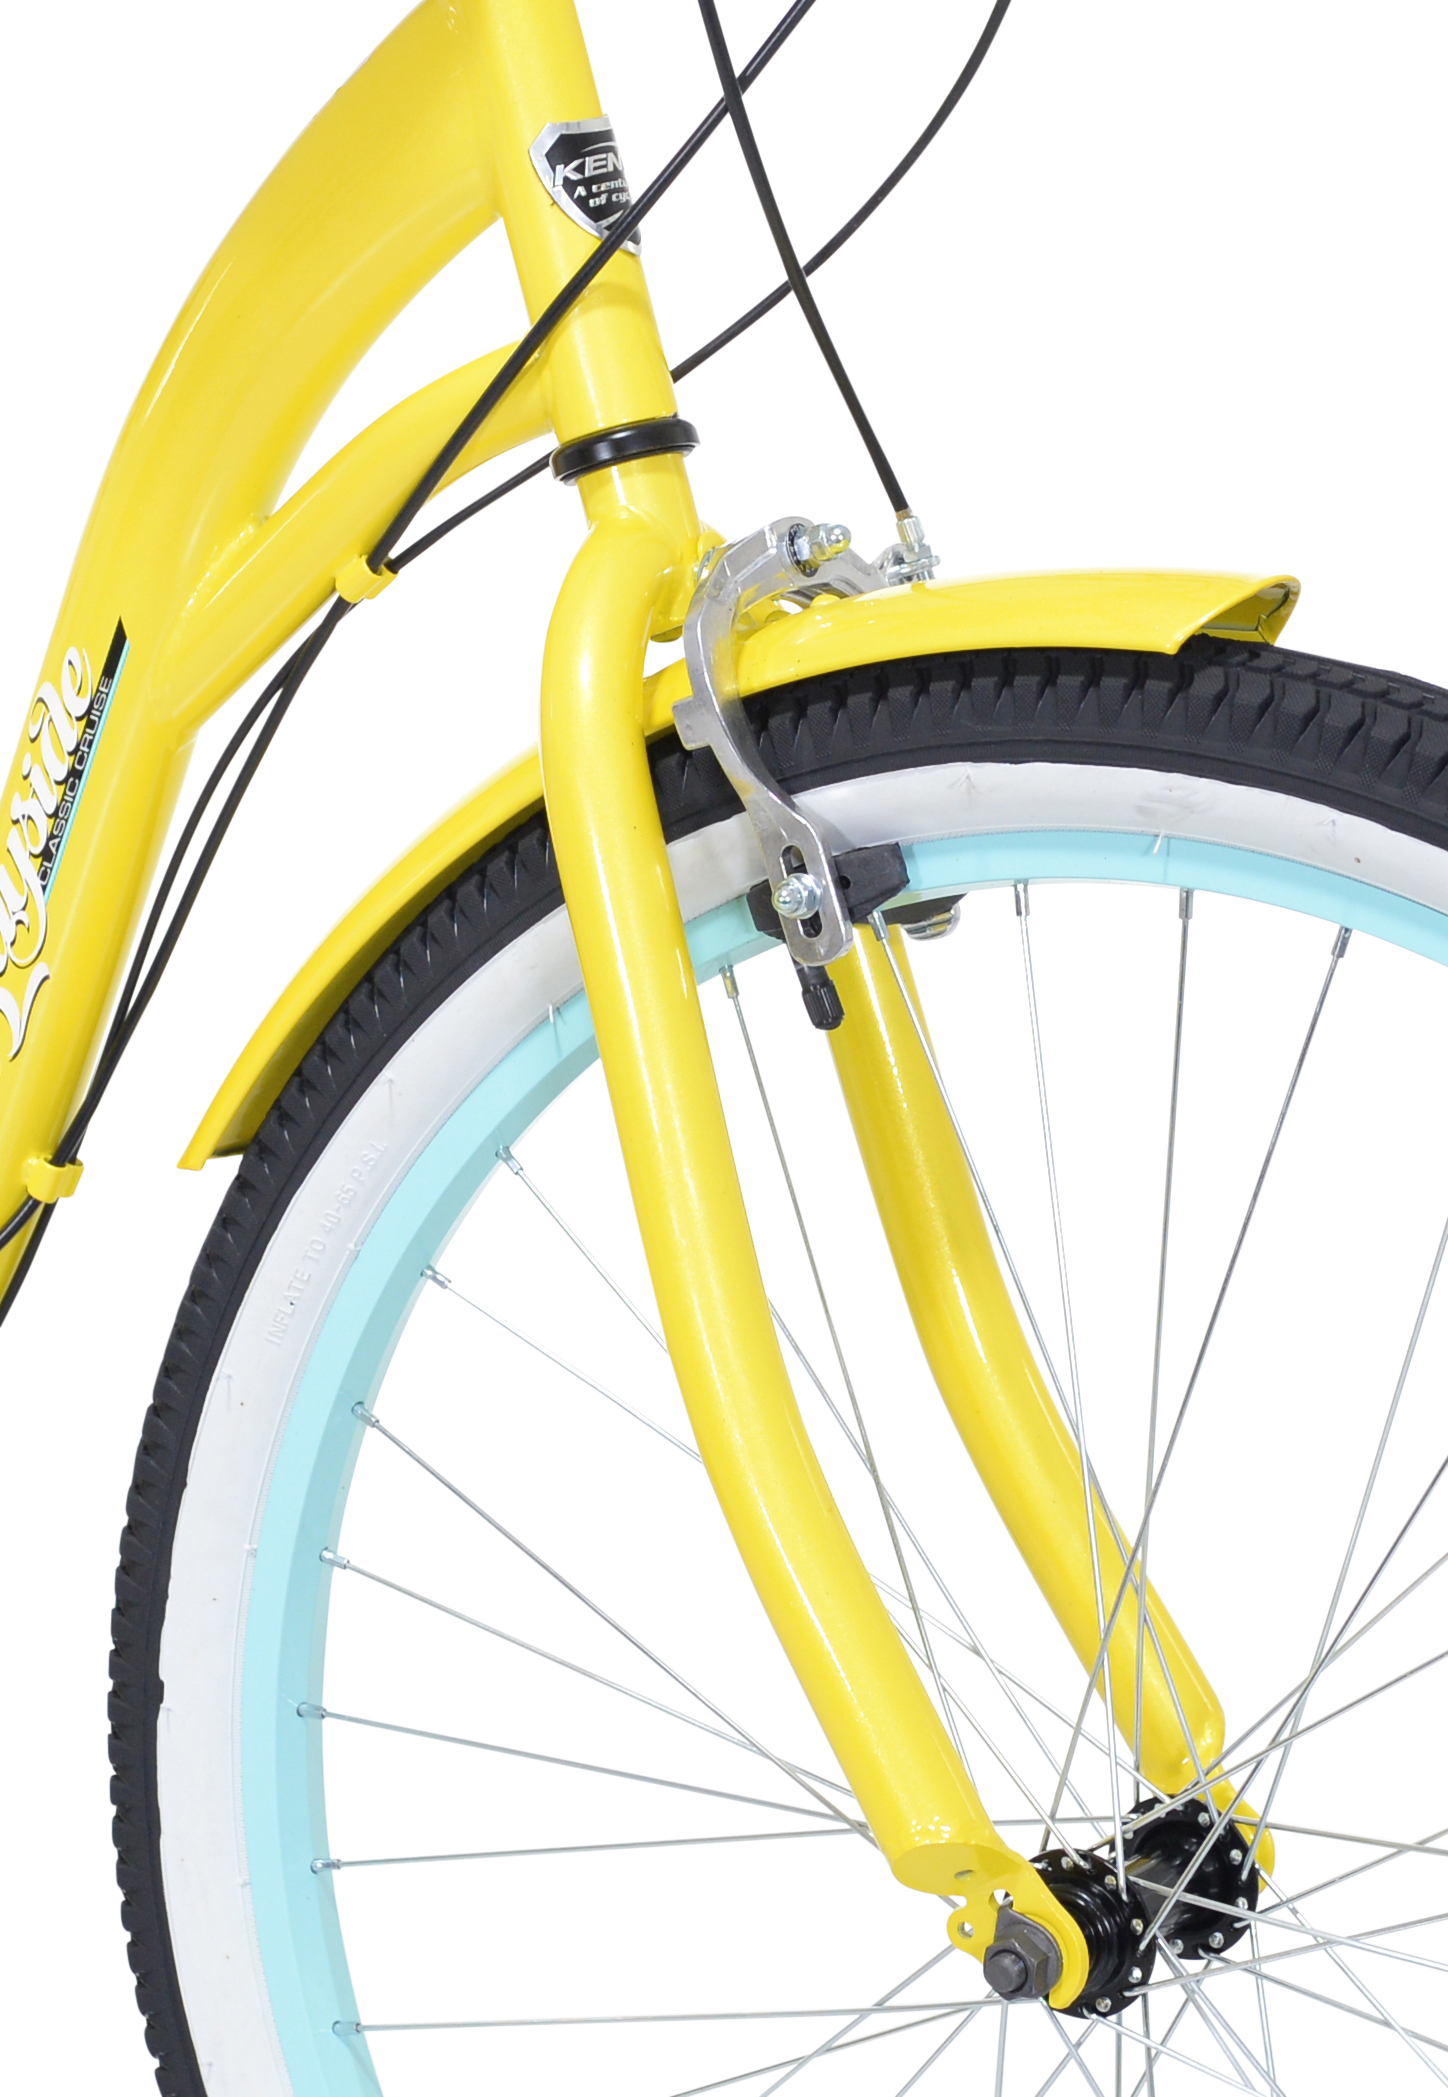 Kent Bicycles 26 in. Bayside Women's Cruiser Bicycle, Yellow - image 4 of 10